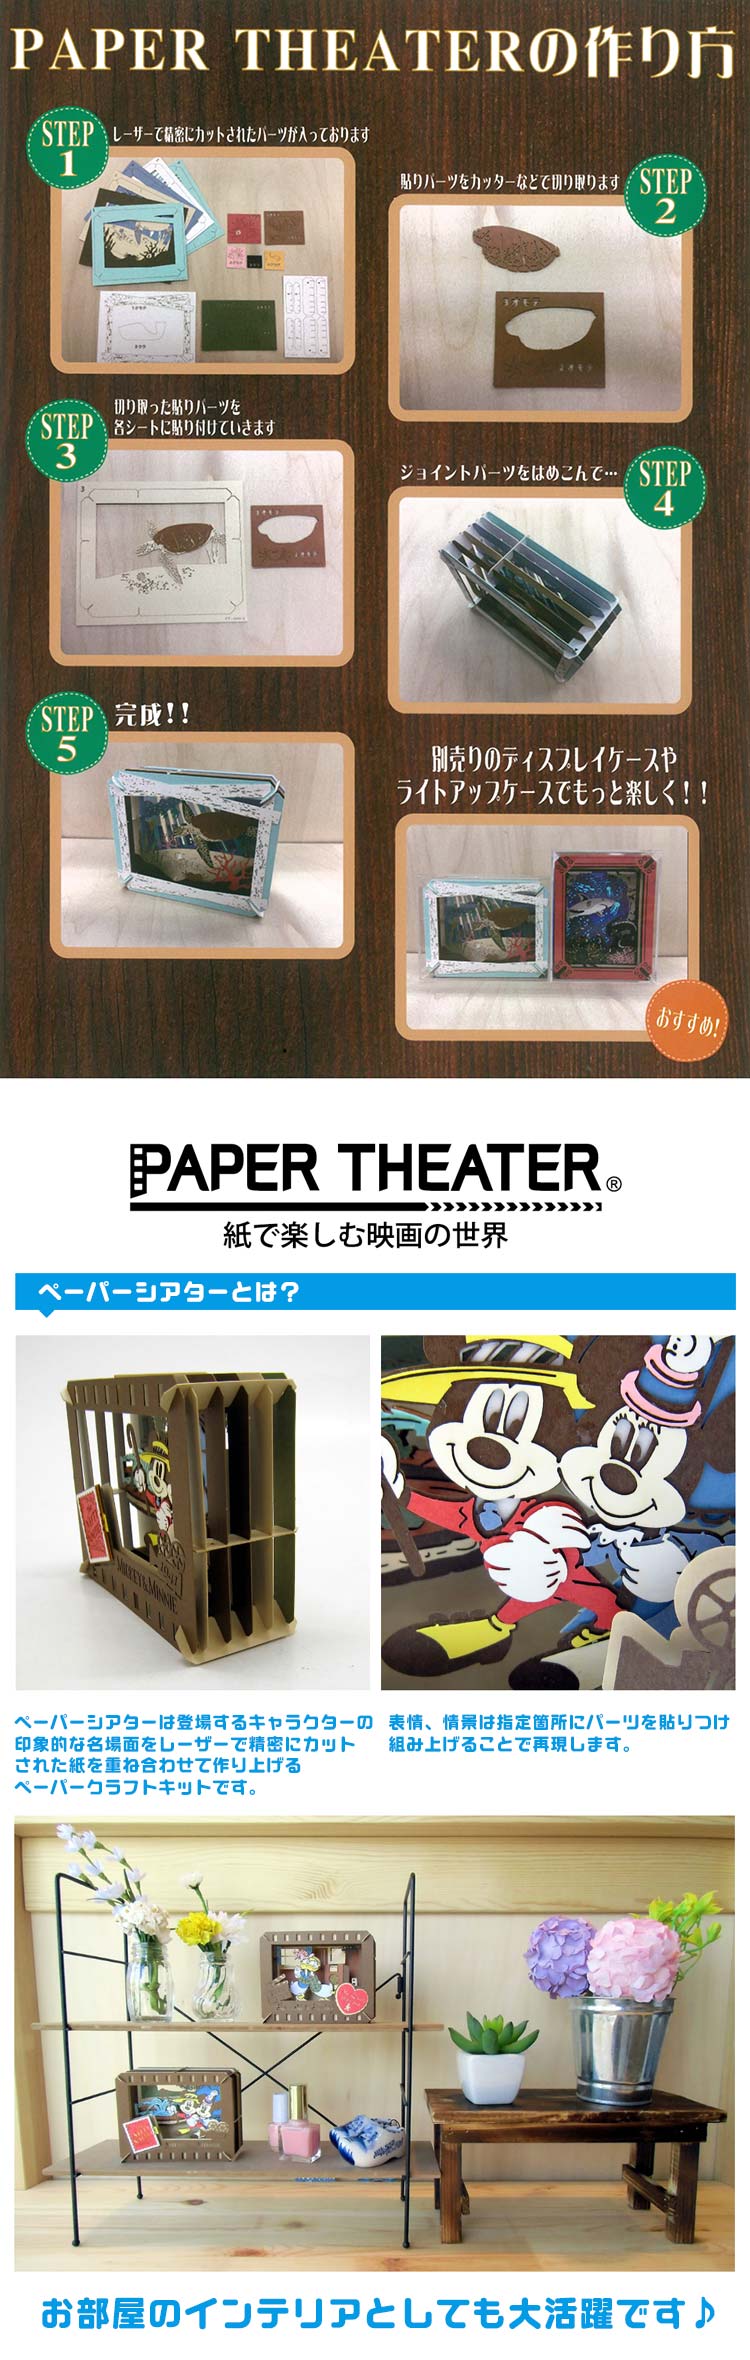 Paper Theater - 千與千尋 - 油屋顧客 (L Size)